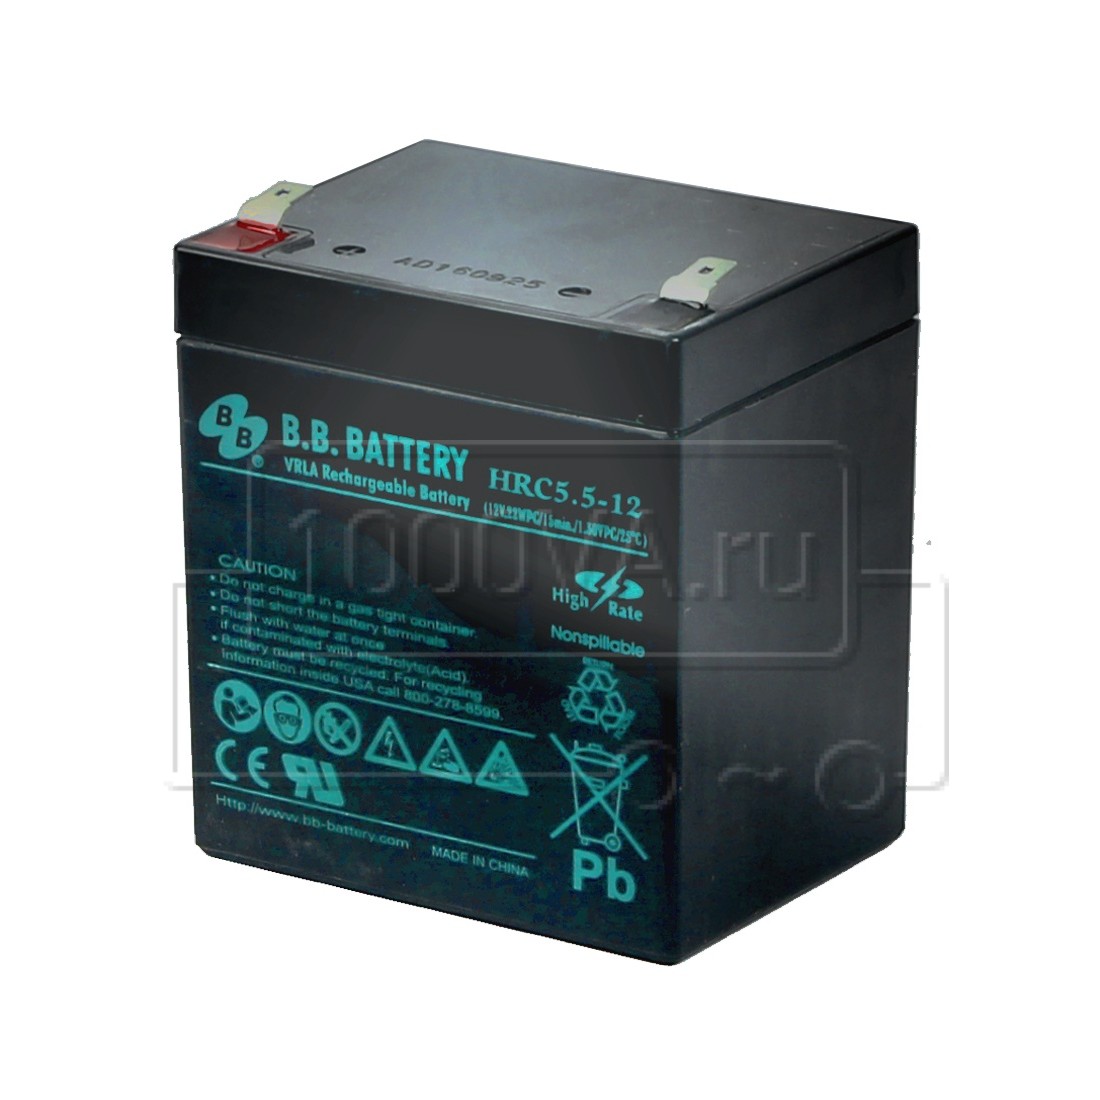 BB Battery HRC 5,5-12